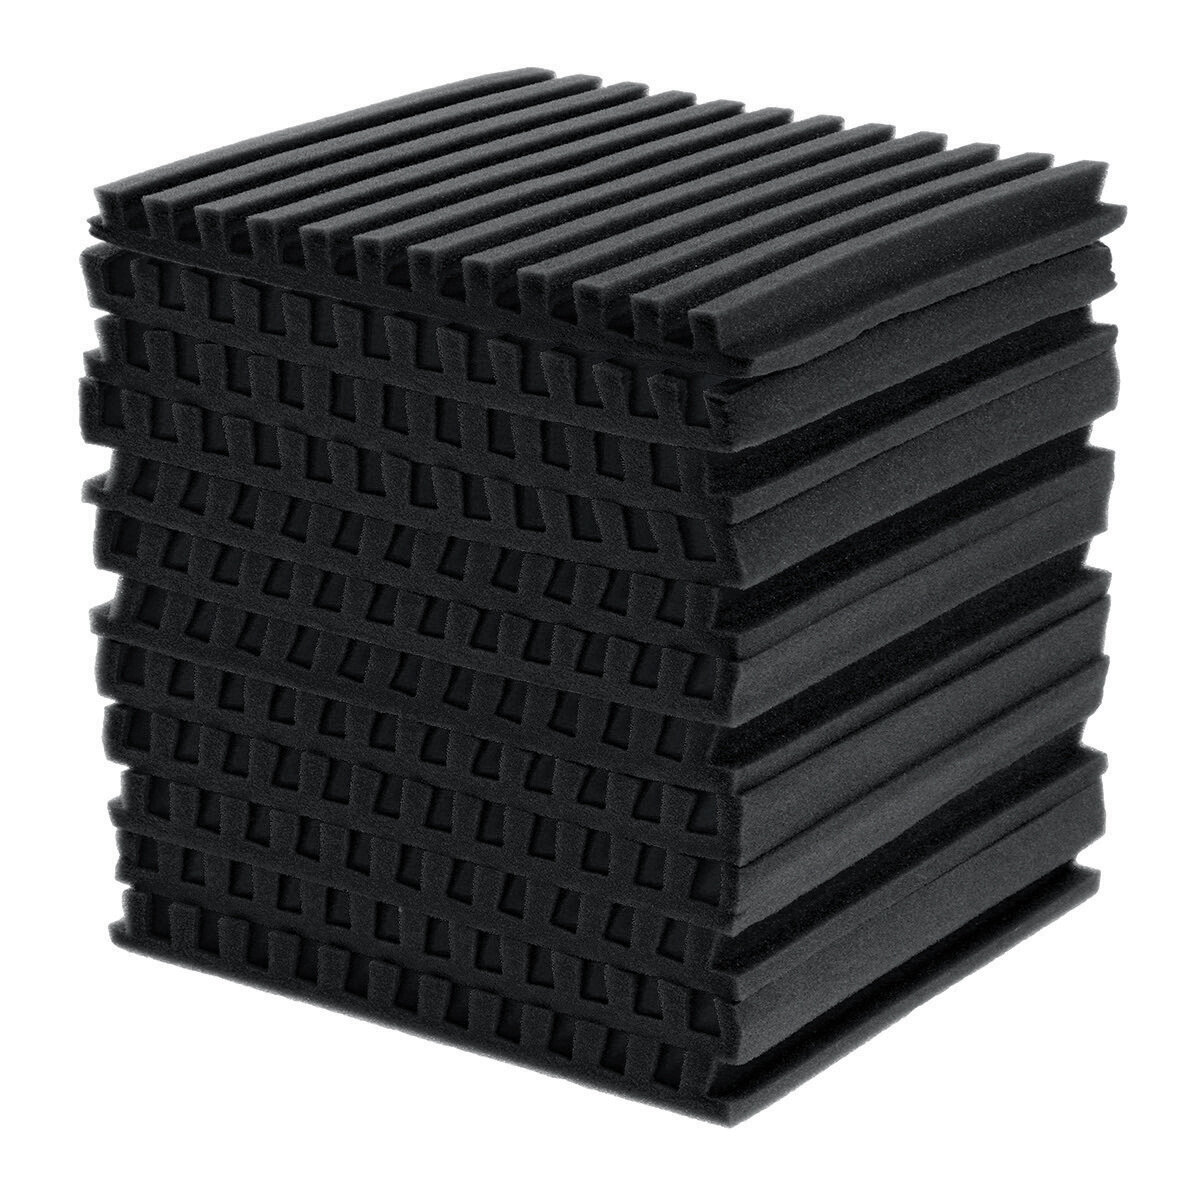 

12Pack Sound-Absorbing Cotton Soundproof Foam Panels Noise Dampening Sponge